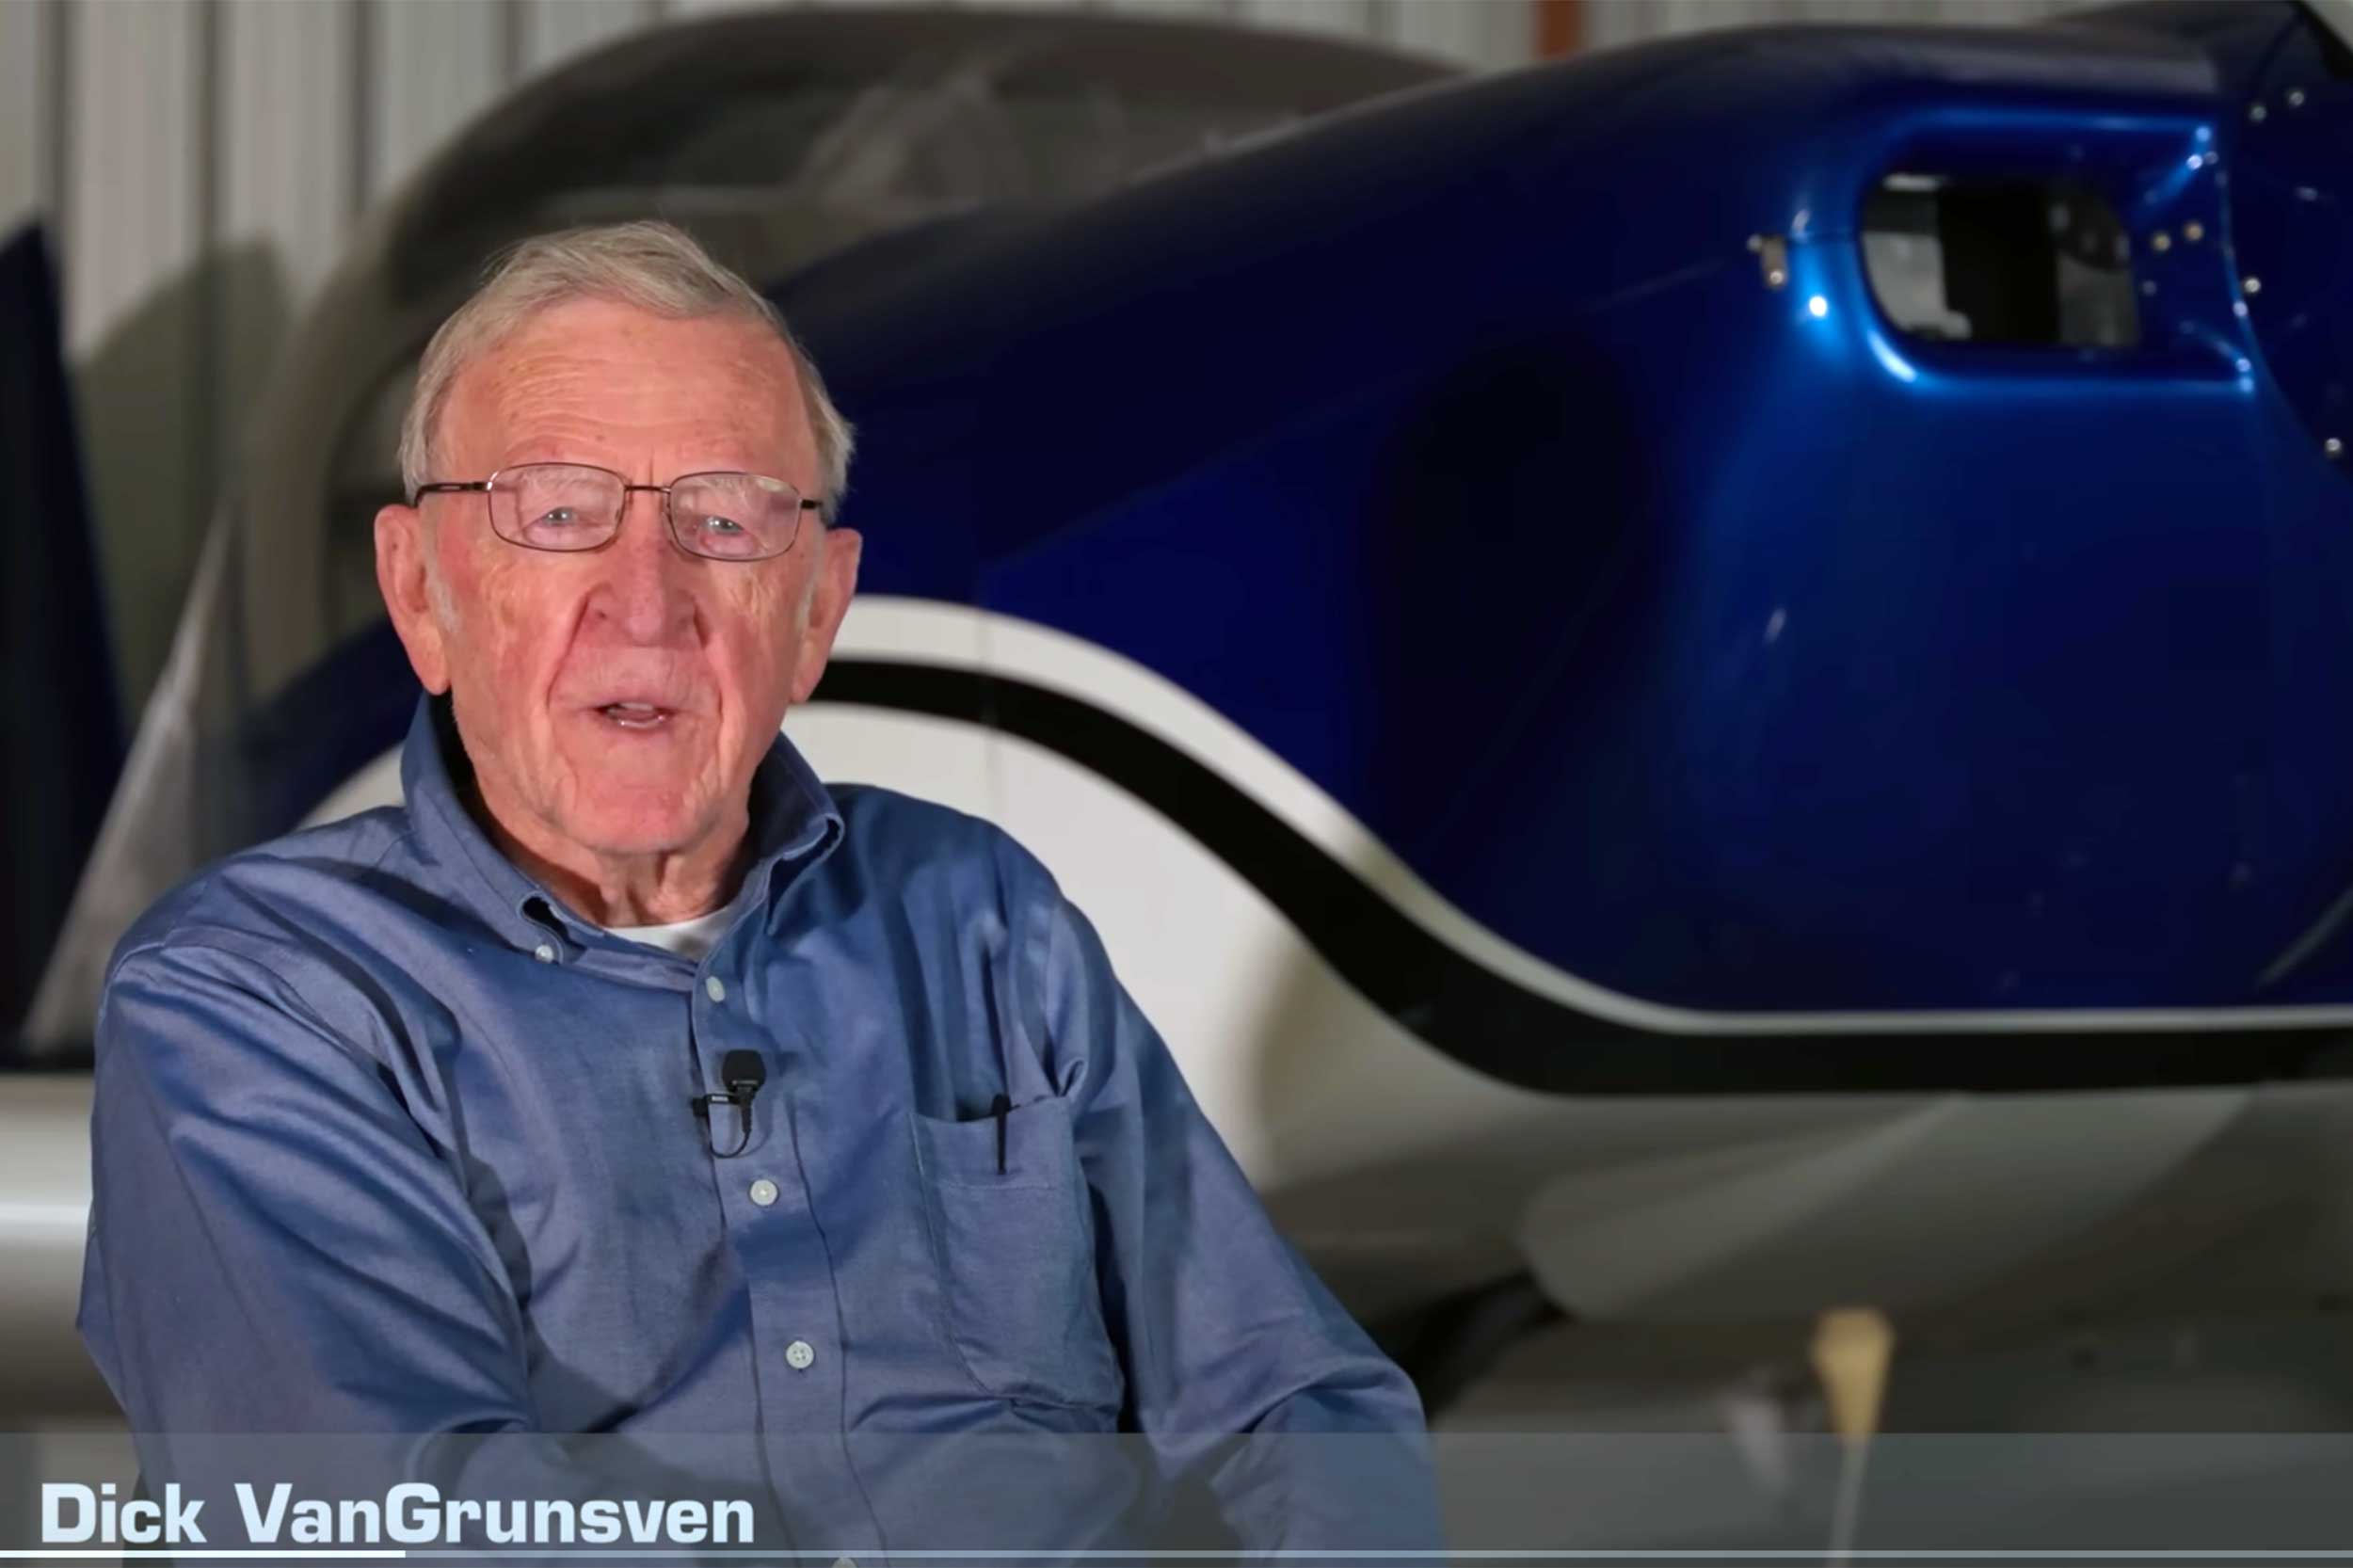 Dick VanGrunsven founder of Van's Aircraft